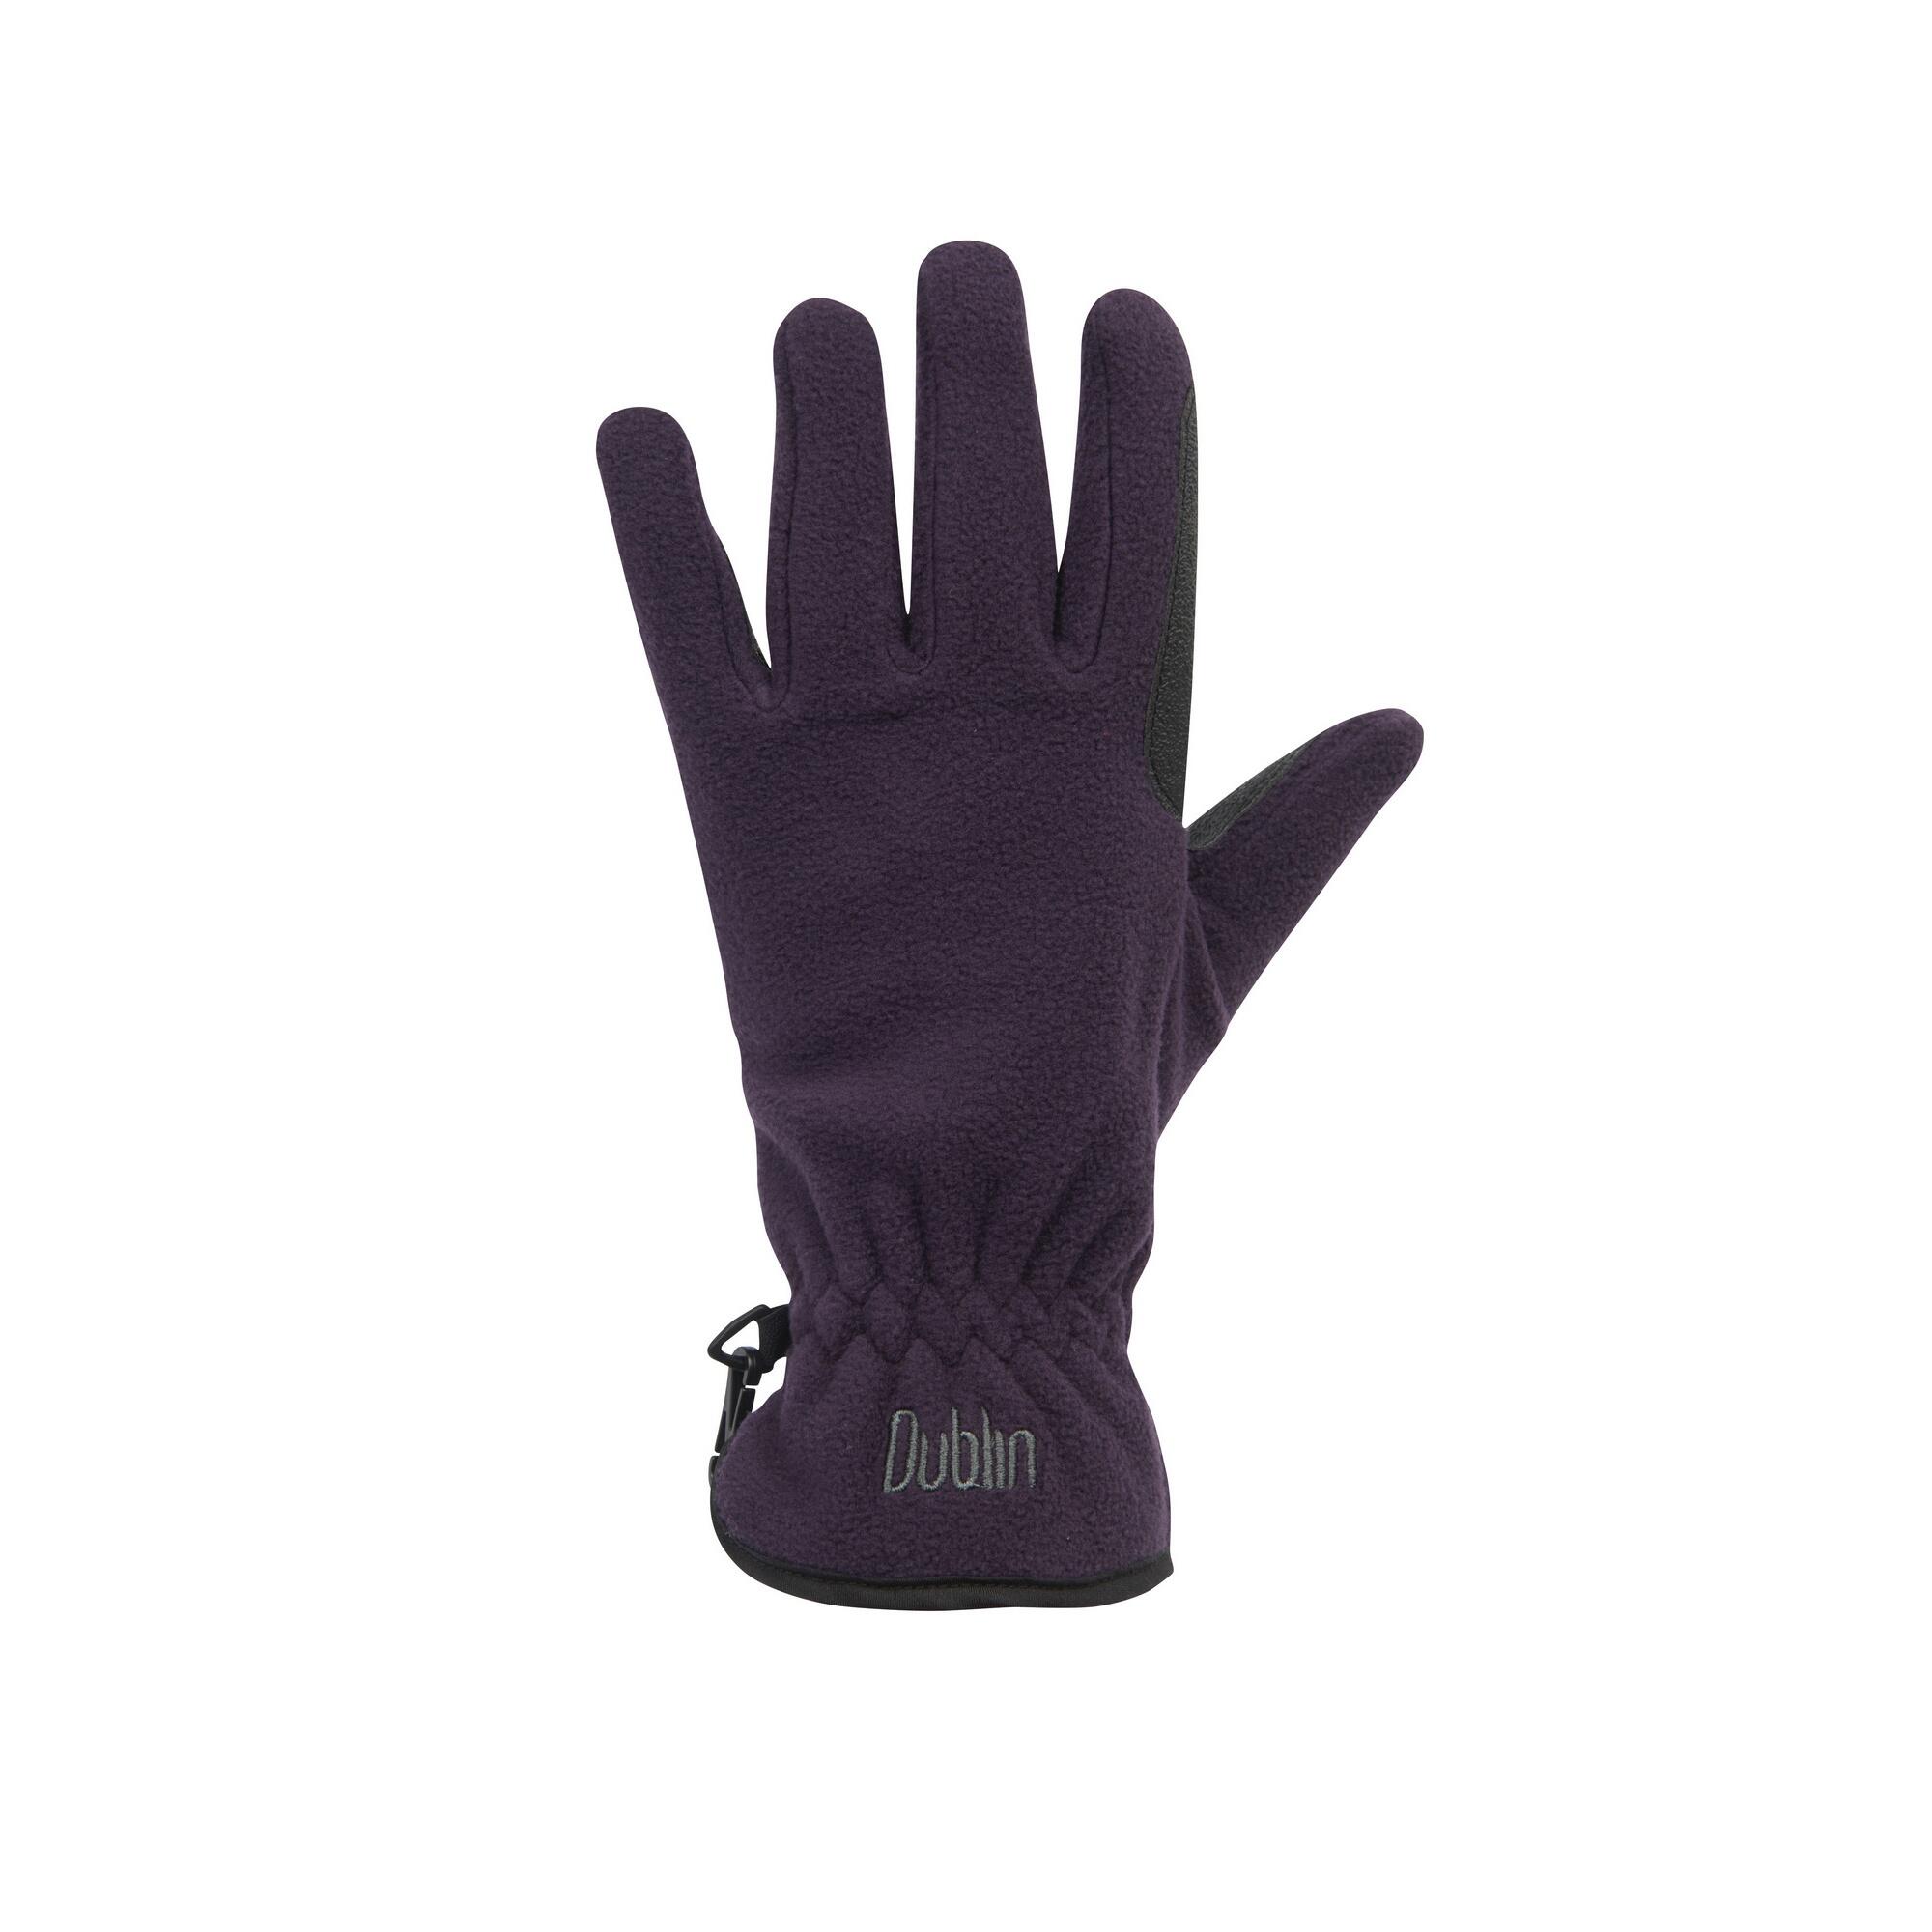 DUBLIN Adults Unisex Polar Fleece Riding Gloves (Purple)